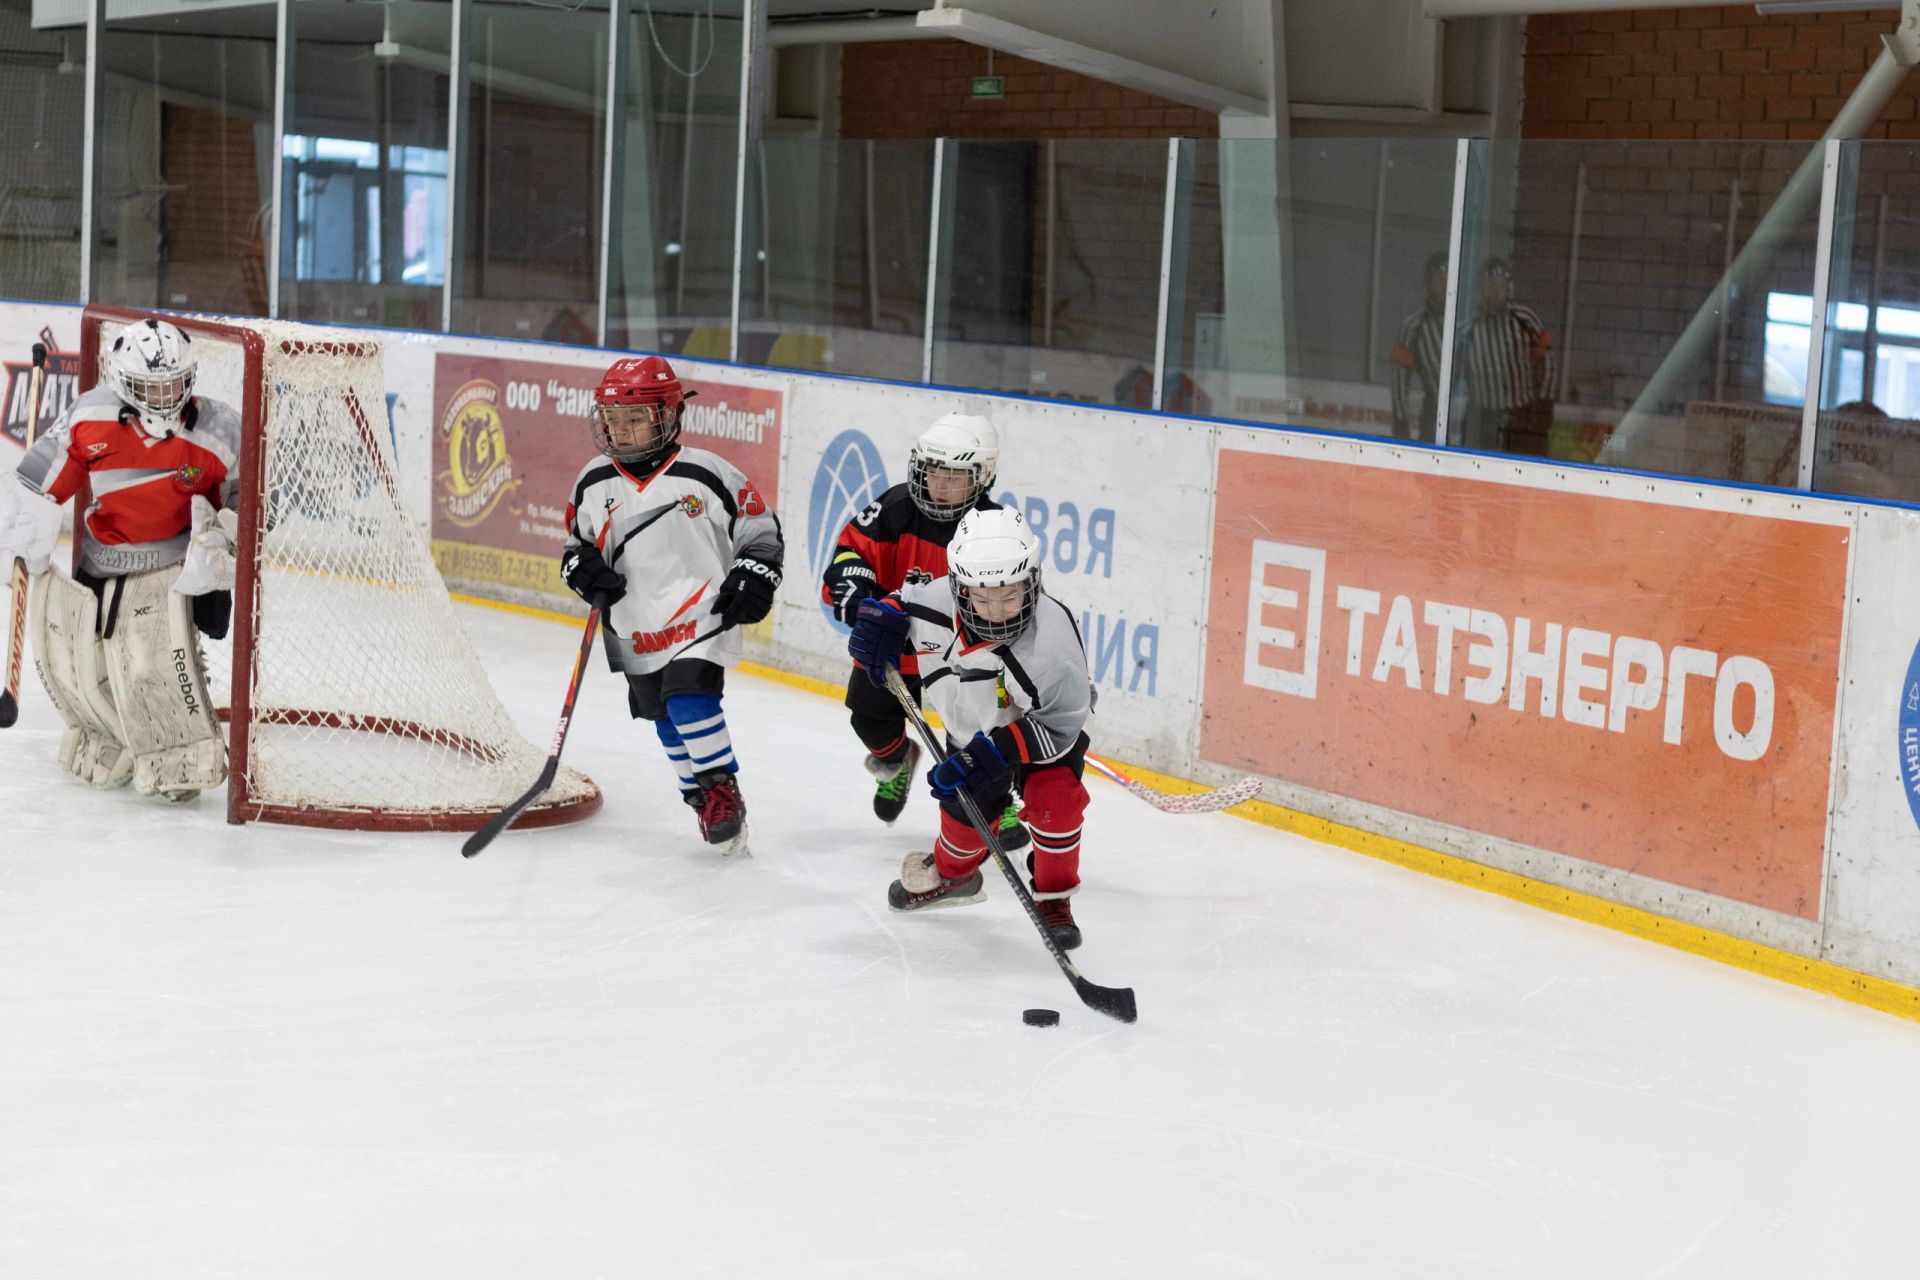 Зәйдә 2015 елгы балалар командалары арасында хоккей фестивале узды